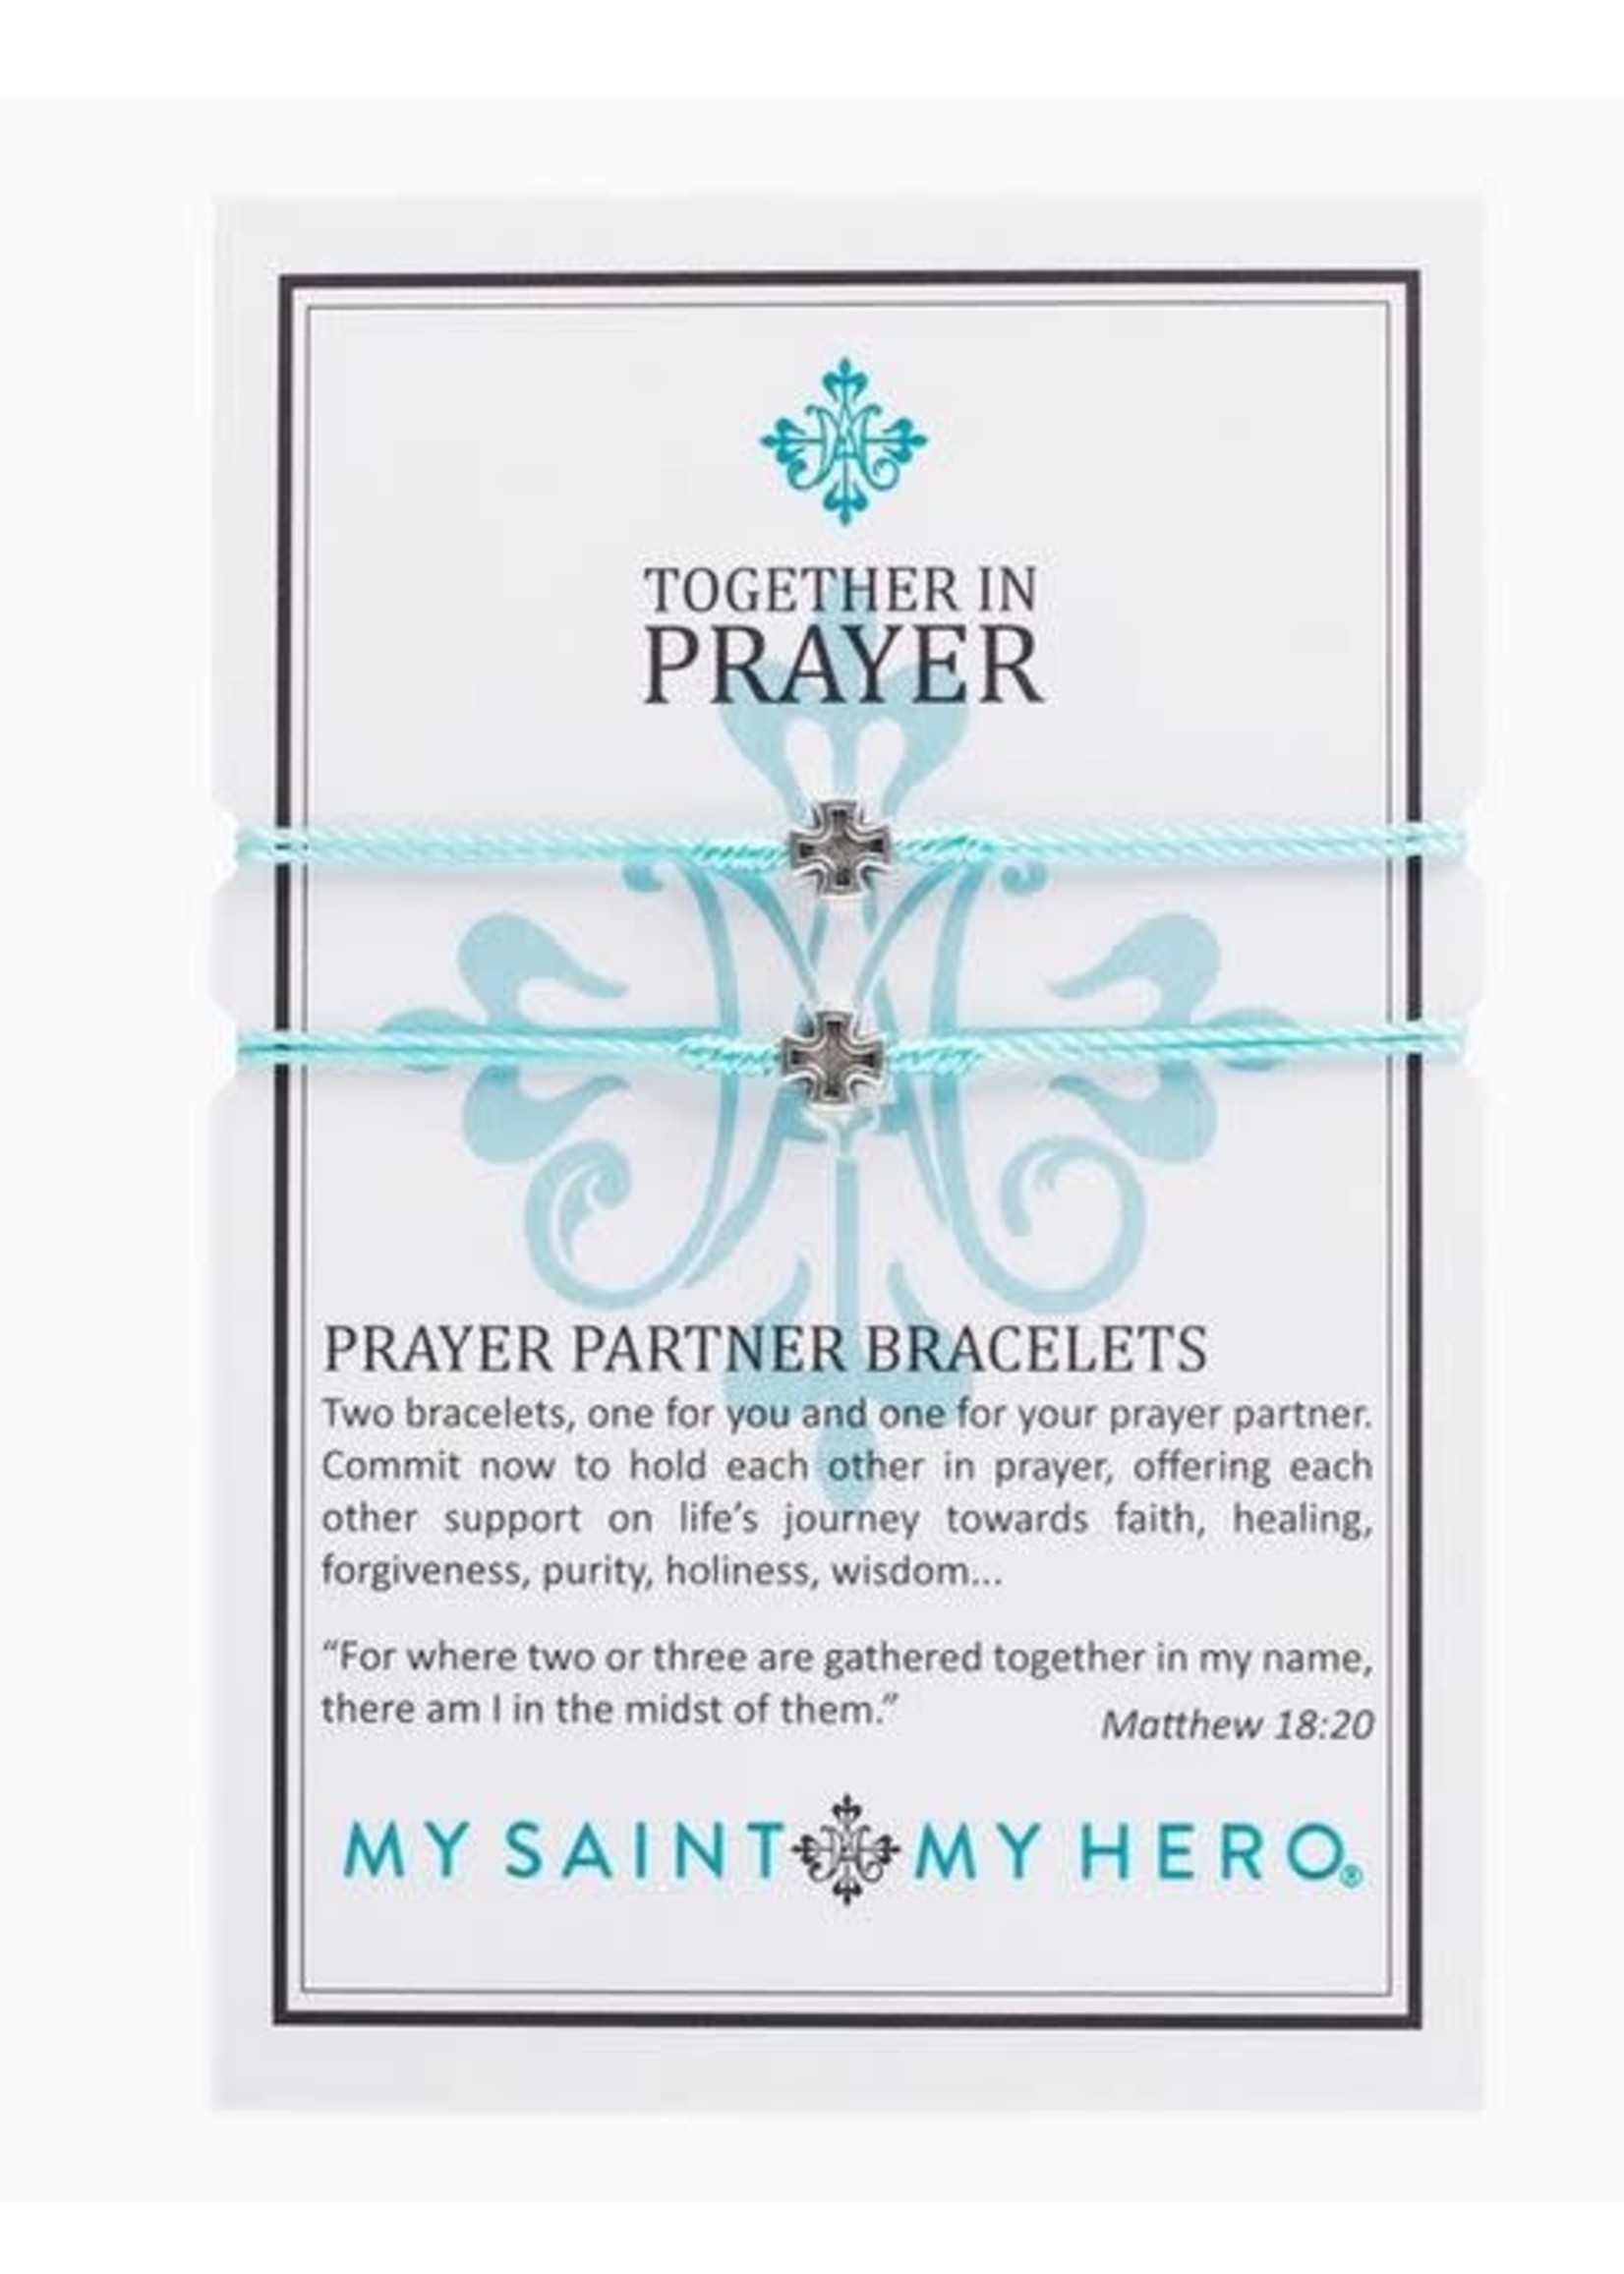 My Saint My Hero Prayer Partner Bracelet